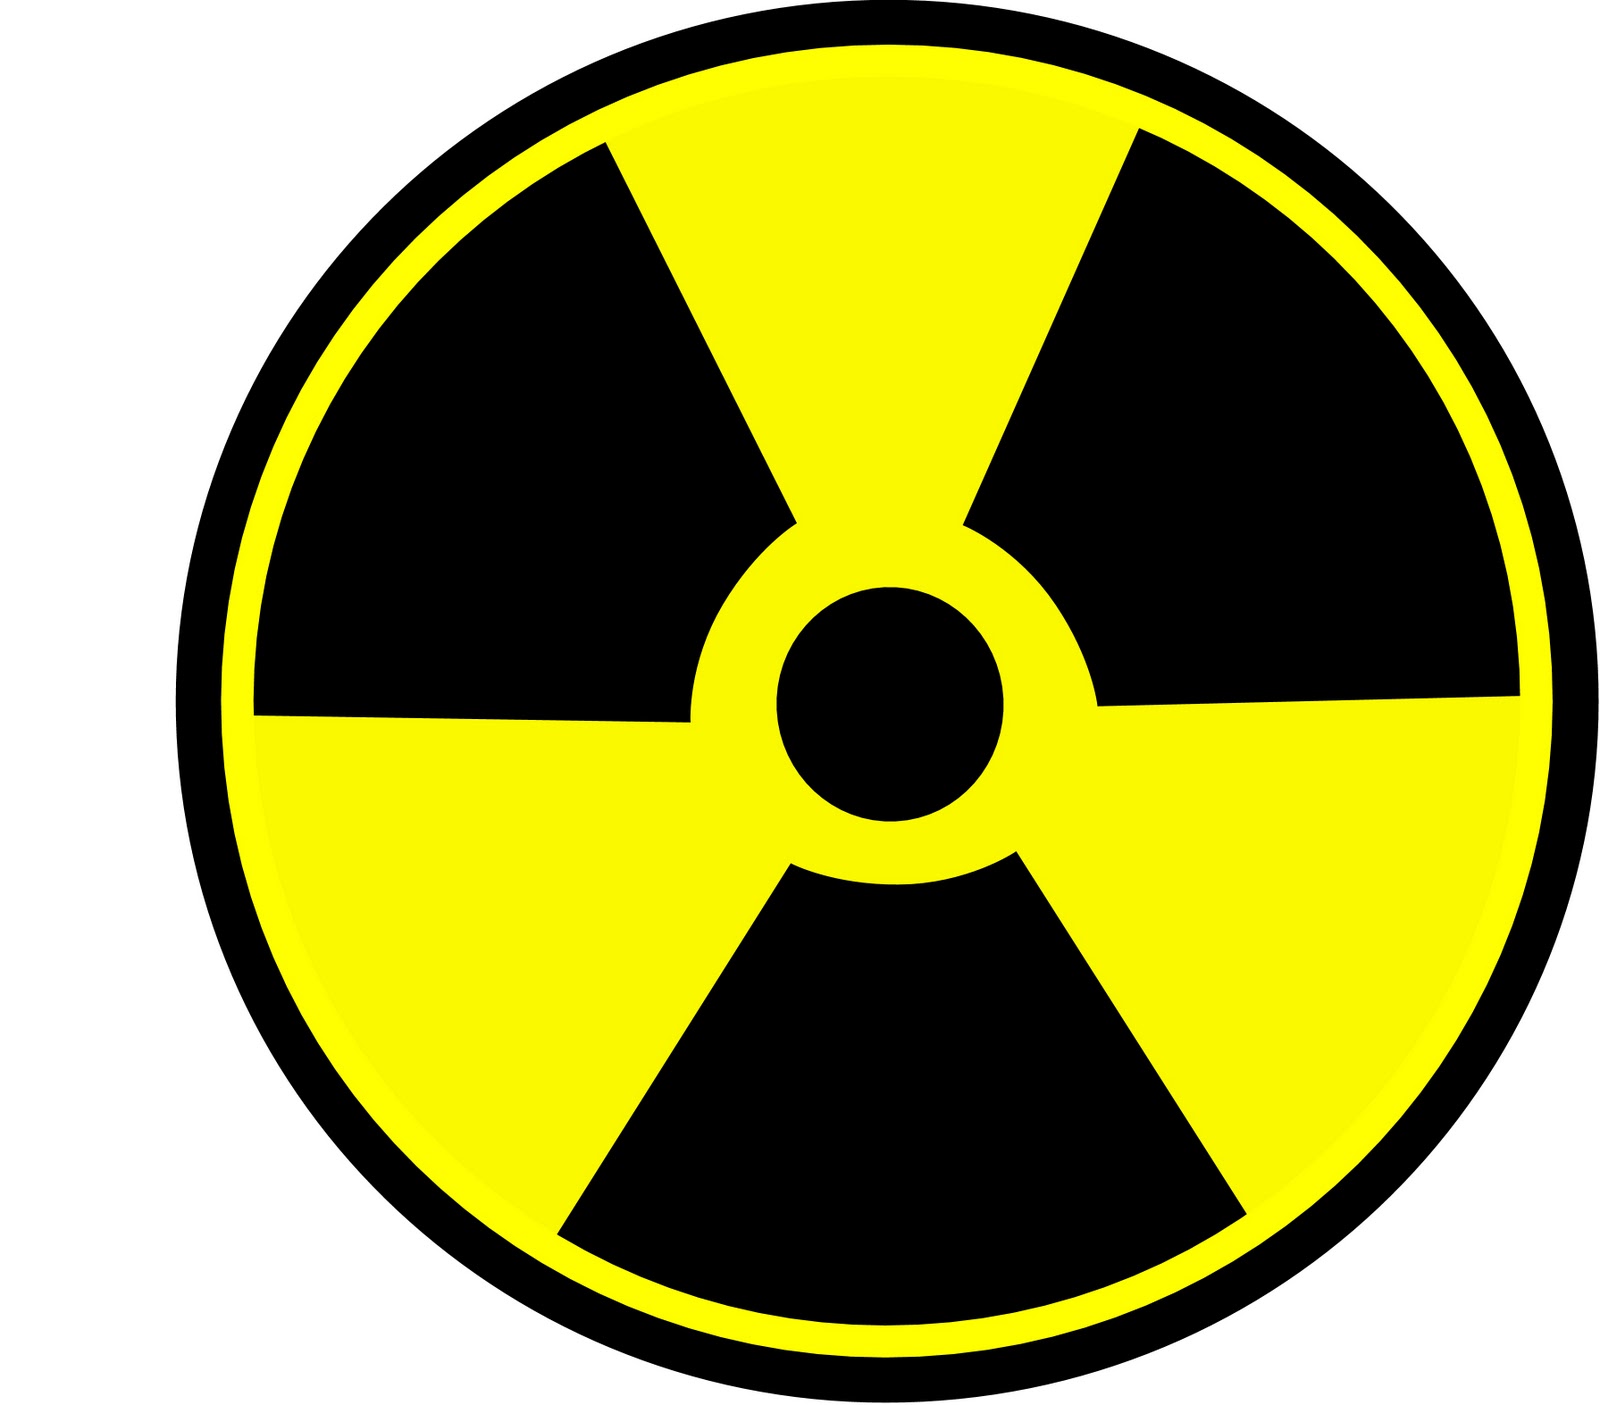 Radiation Hazard Symbol HD Wallpaper Download Free Wallpapers in ...